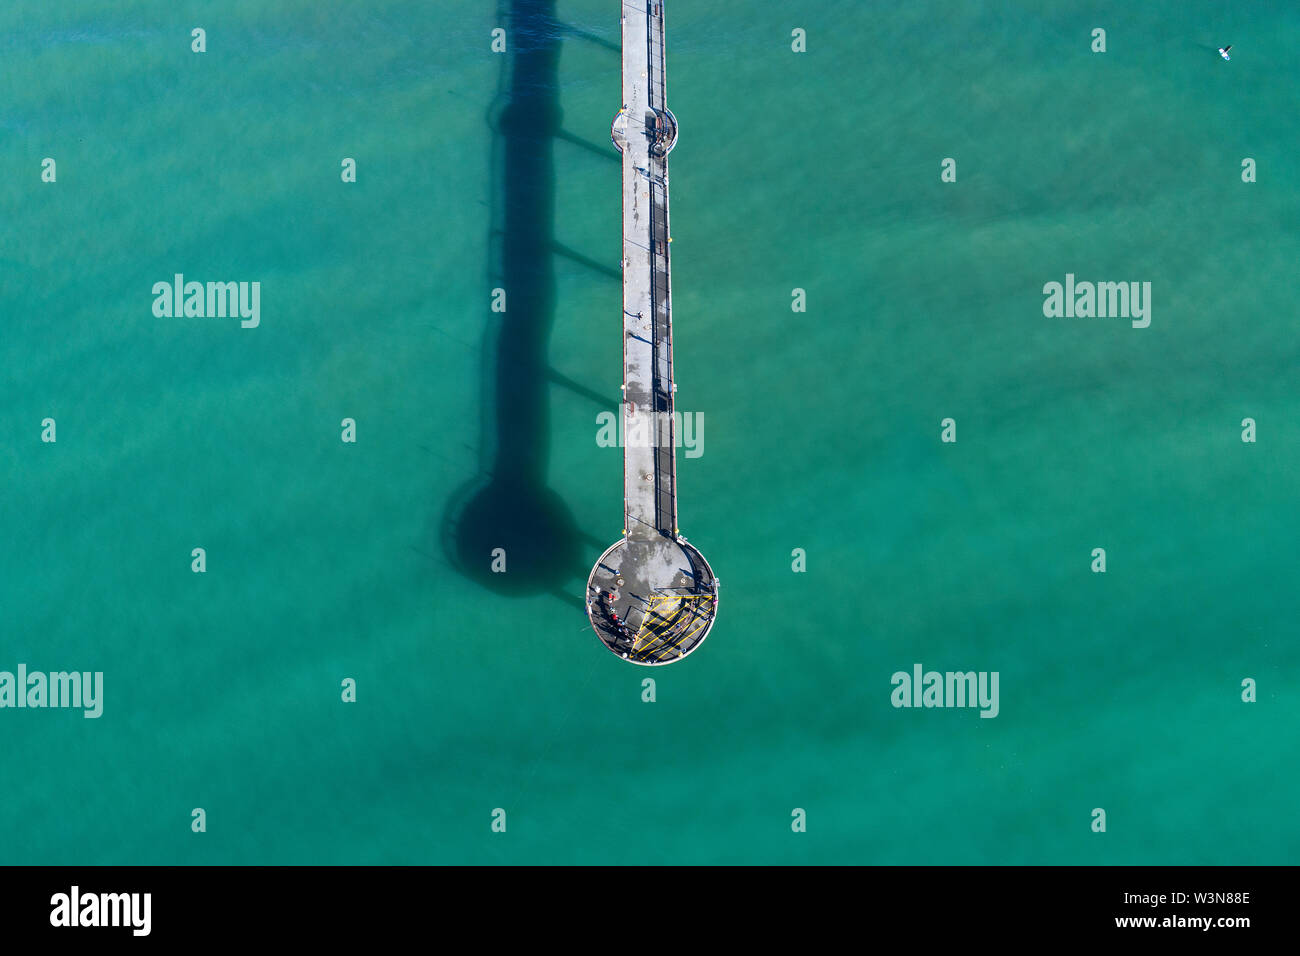 New Brighton Pier, Christchurch, Canterbury, South Island, New Zealand - drone aerial Stock Photo